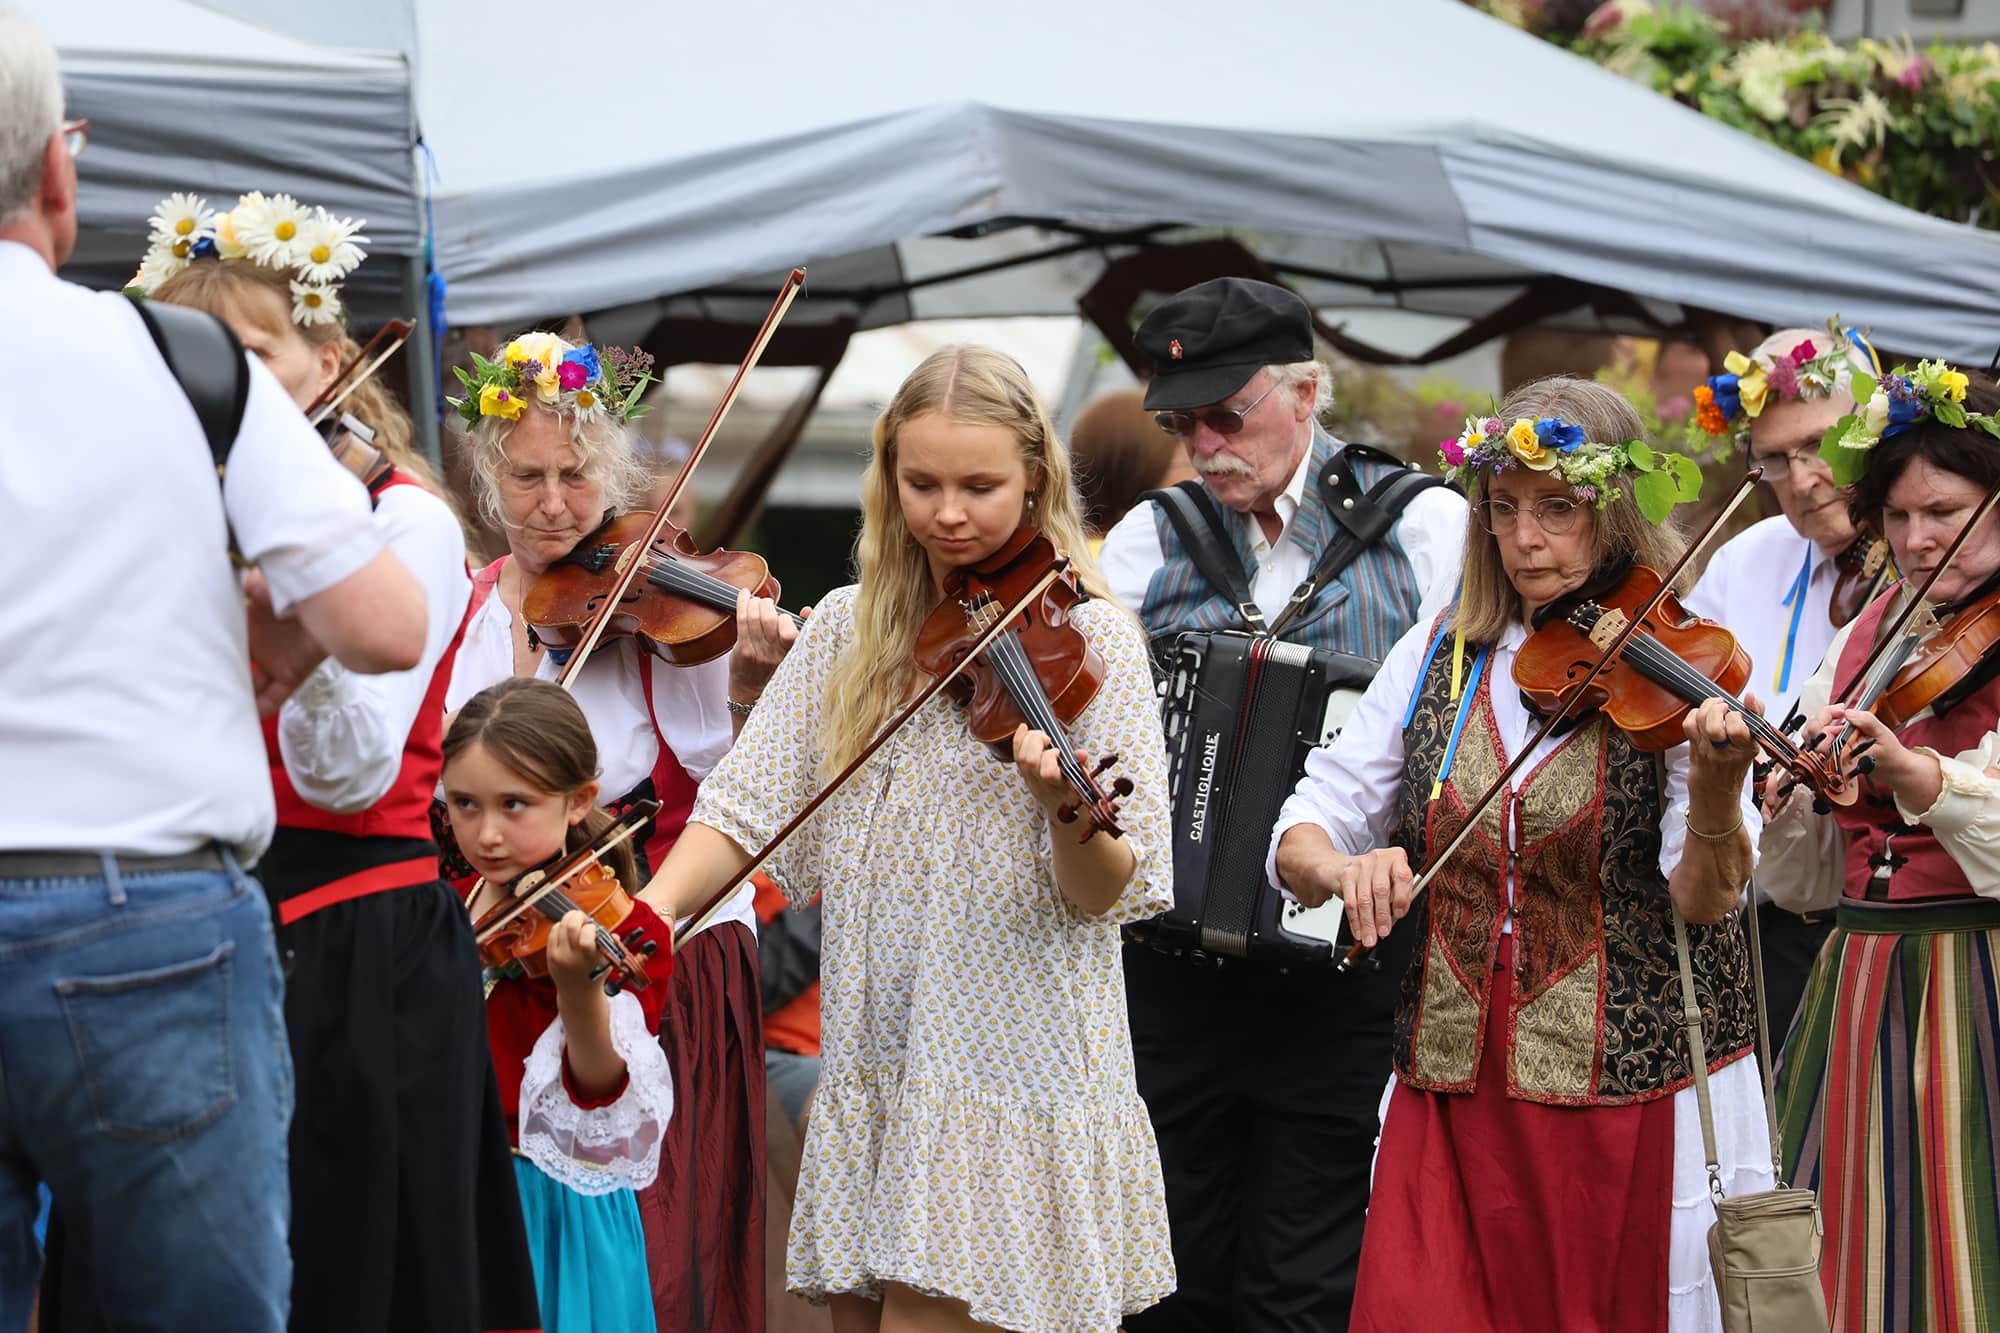 A Scandinavian celebration to welcome summer in Shrewsbury